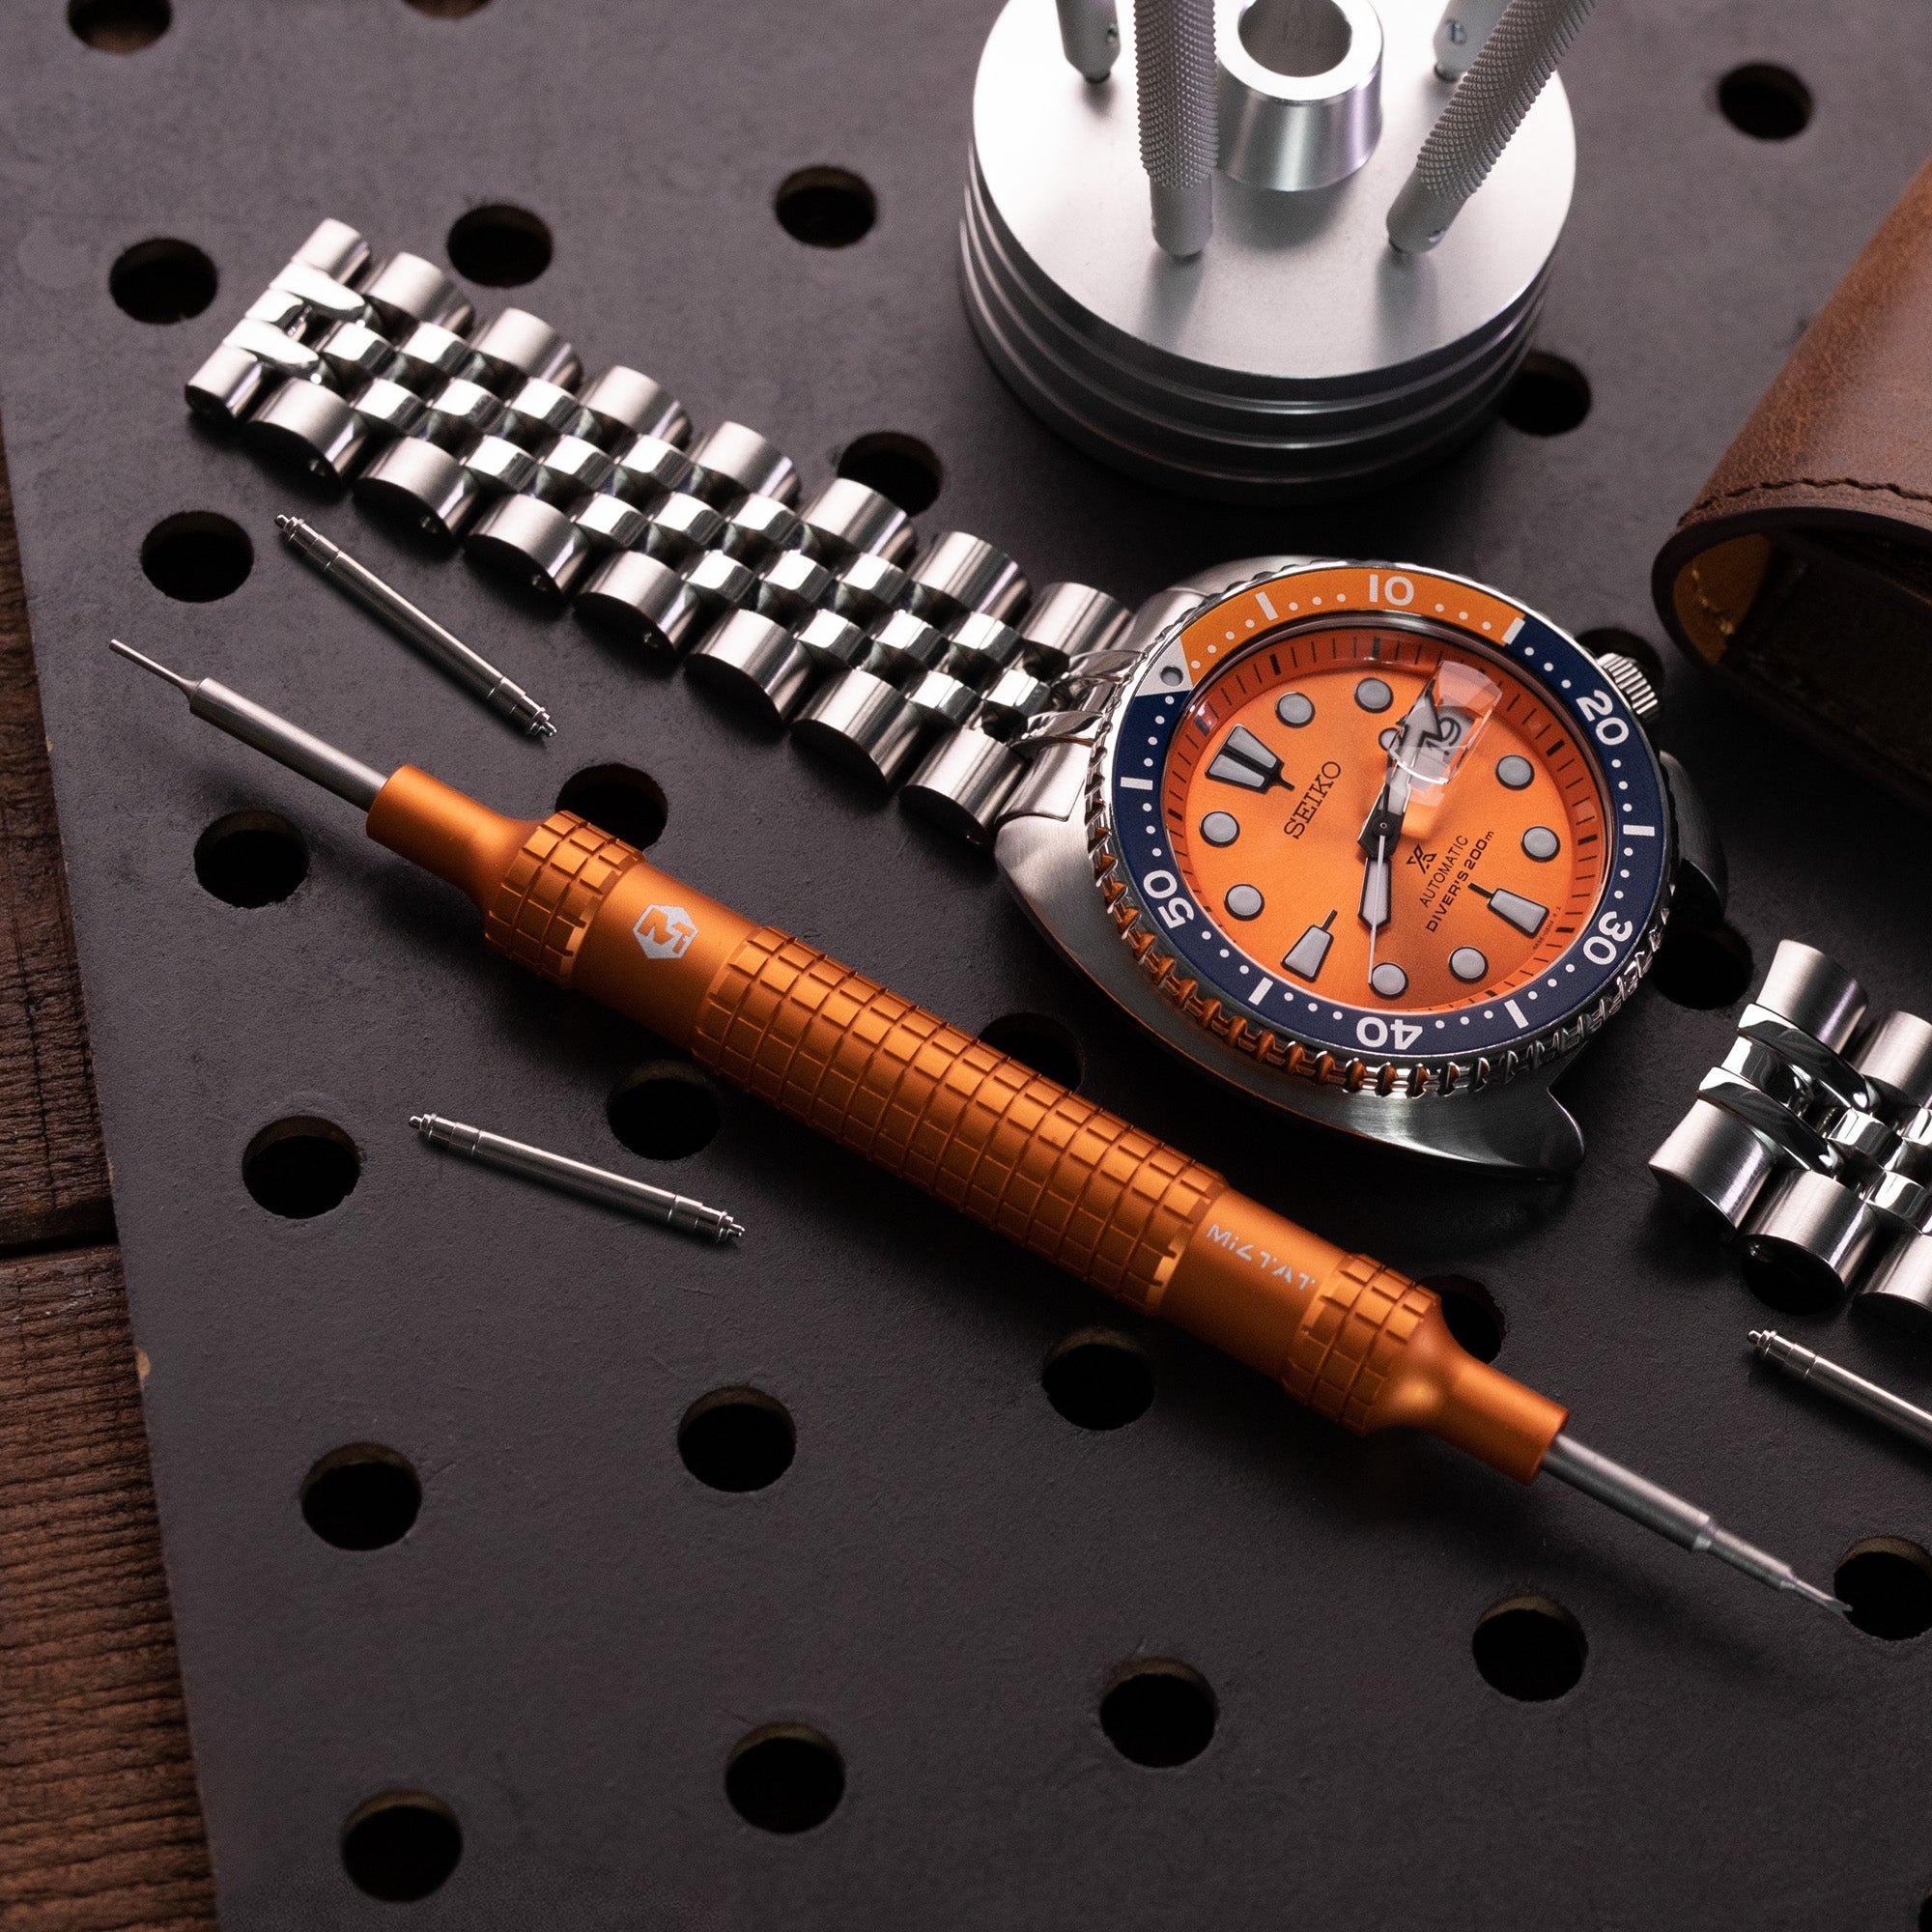 Japan made Elegant Spring Bar Watch Band Tool for changing watch straps, Orange Strapcode Watch Bands